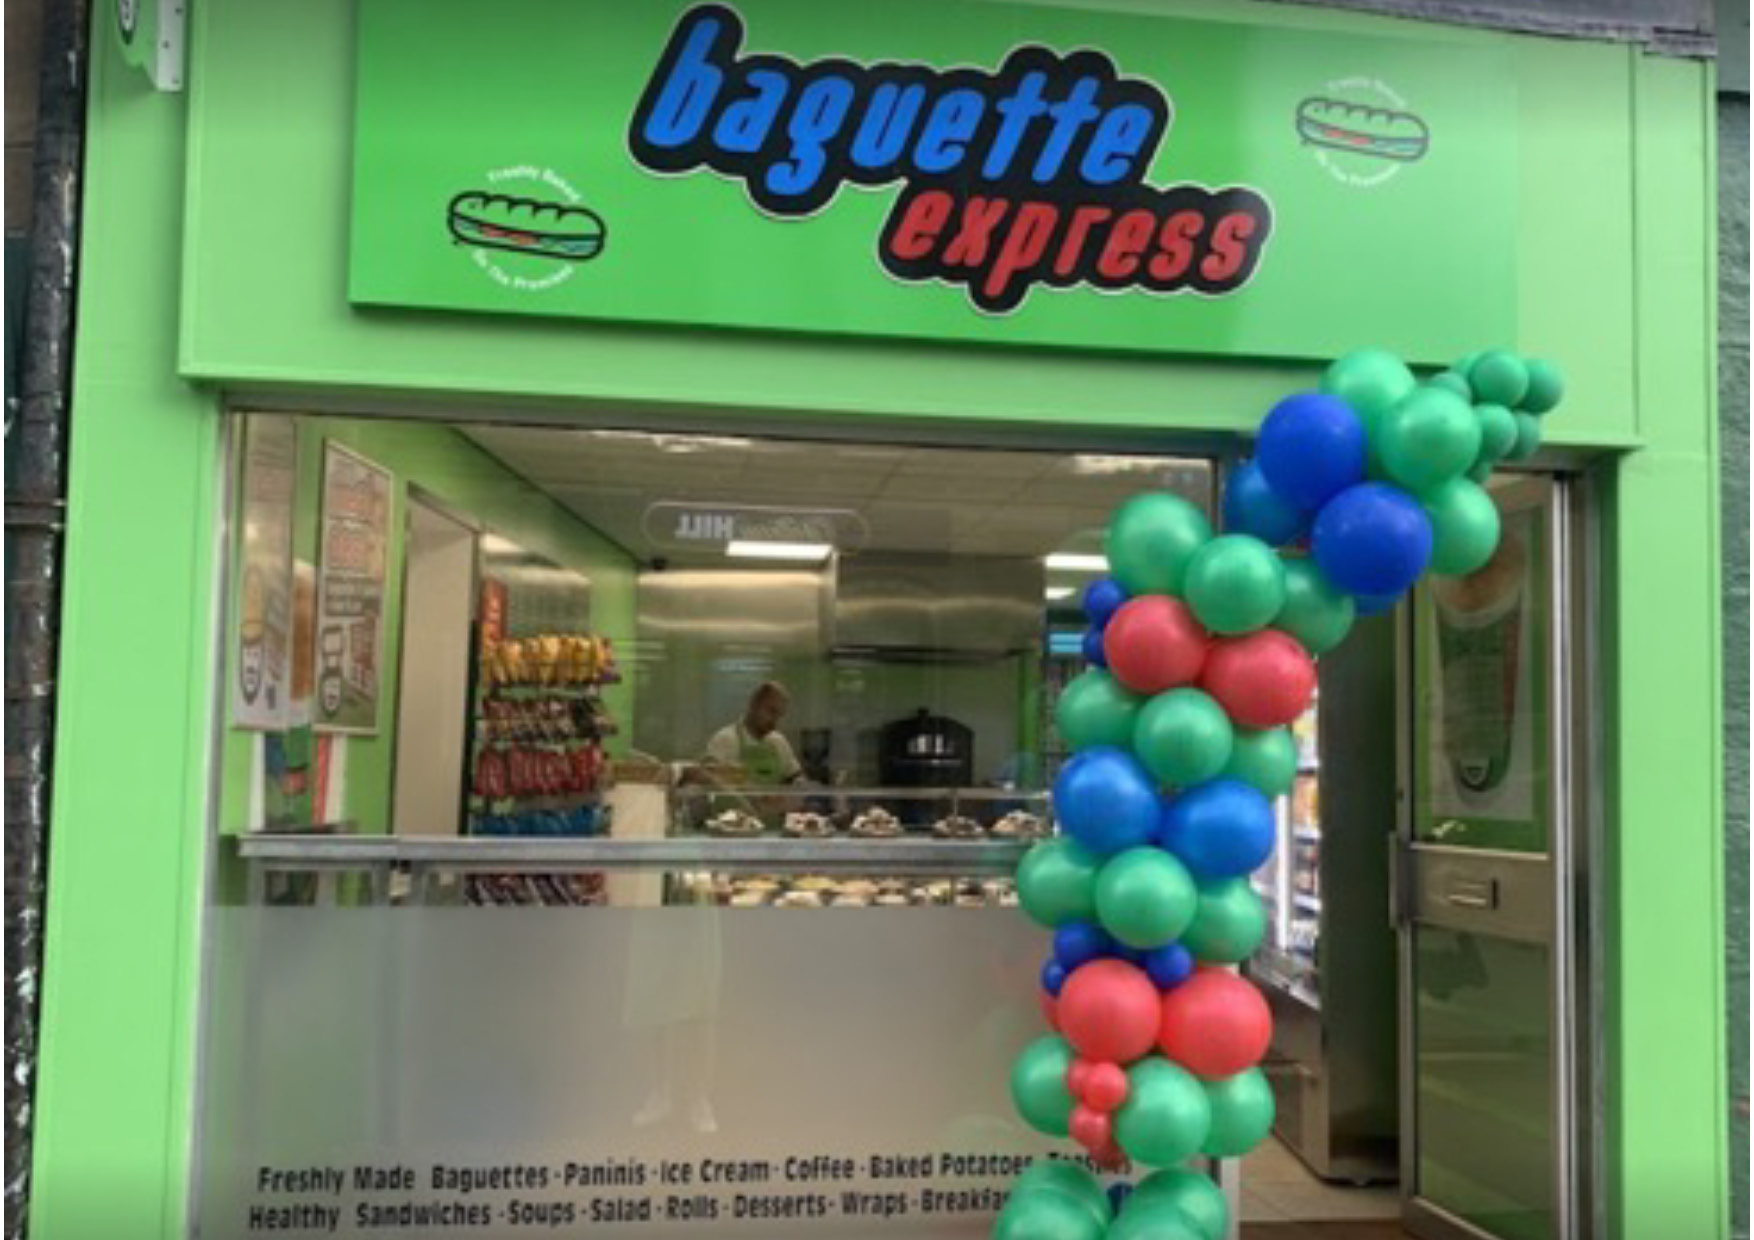 Baguettes express